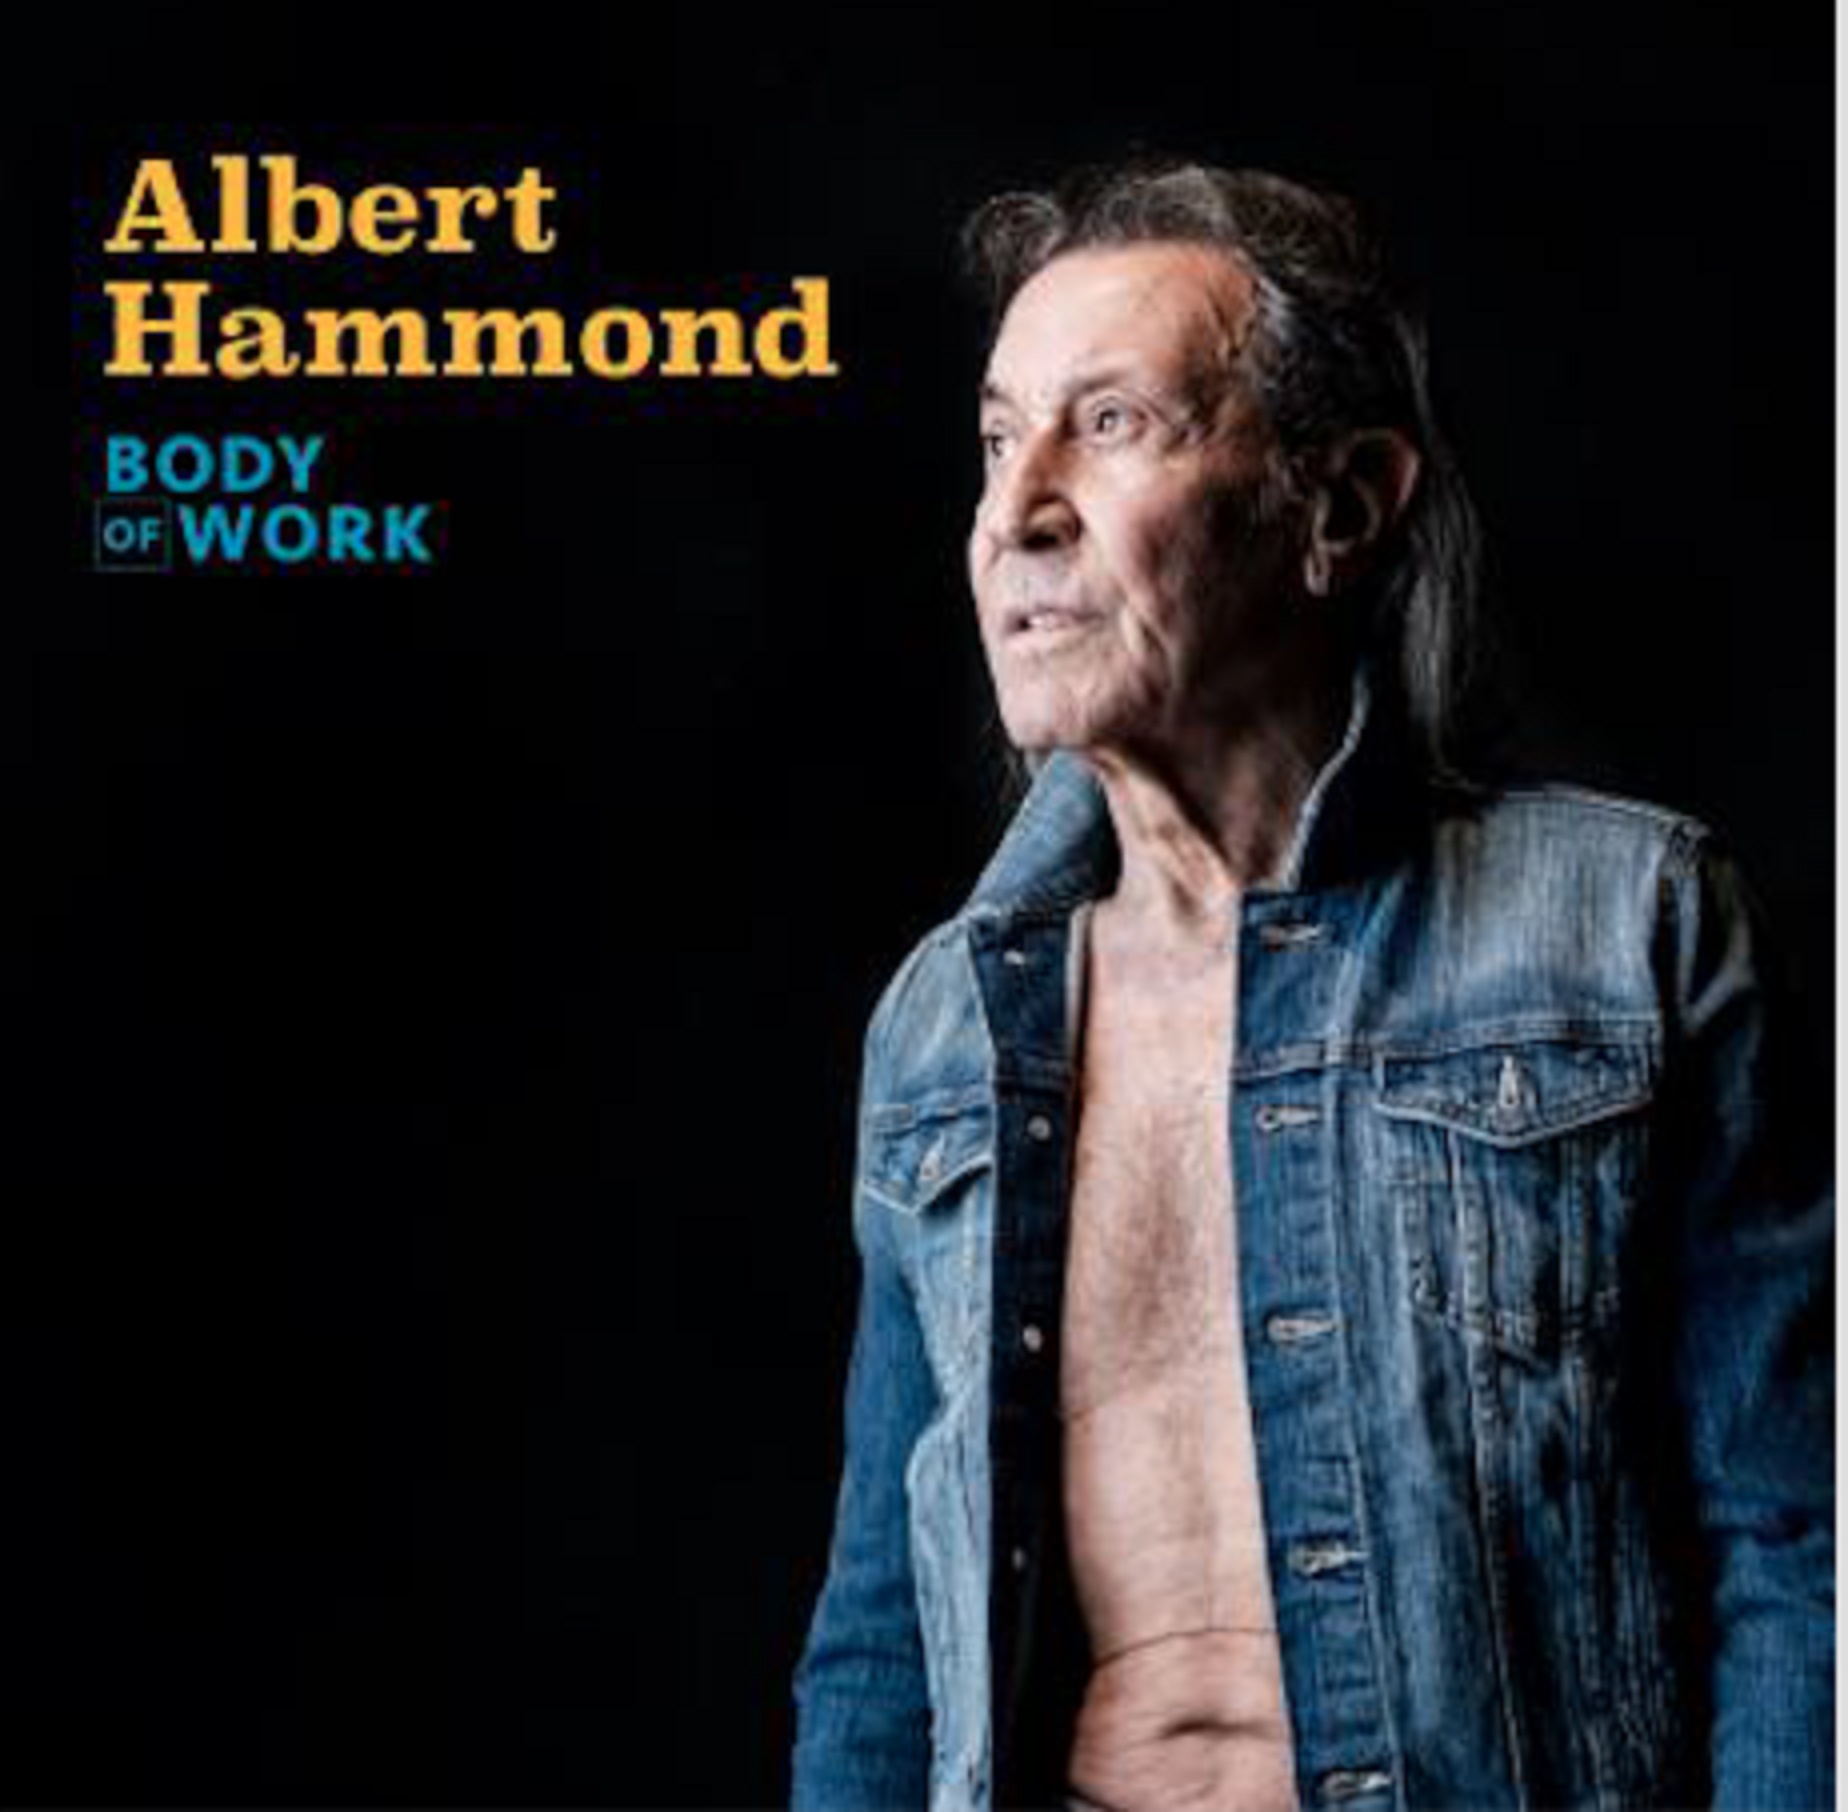 Legendary Songwriter Albert Hammond Releases New Album "Body Of Work" + new video for "Looking Back"